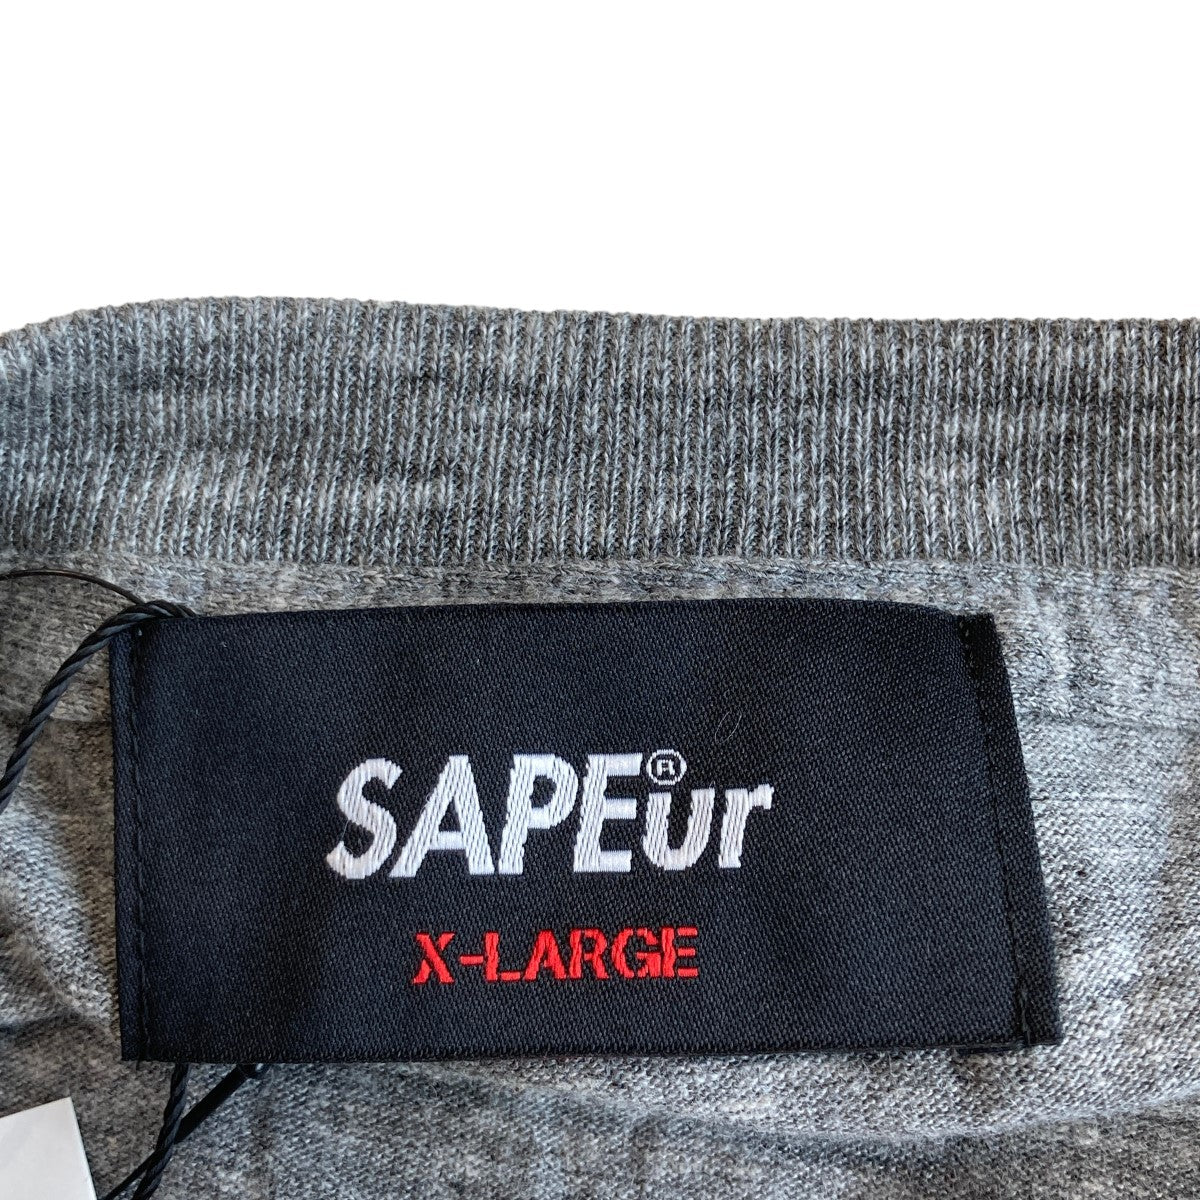 SAPEur(サプール) ロゴTシャツ a0022-120 a0022-120 グレー サイズ L 